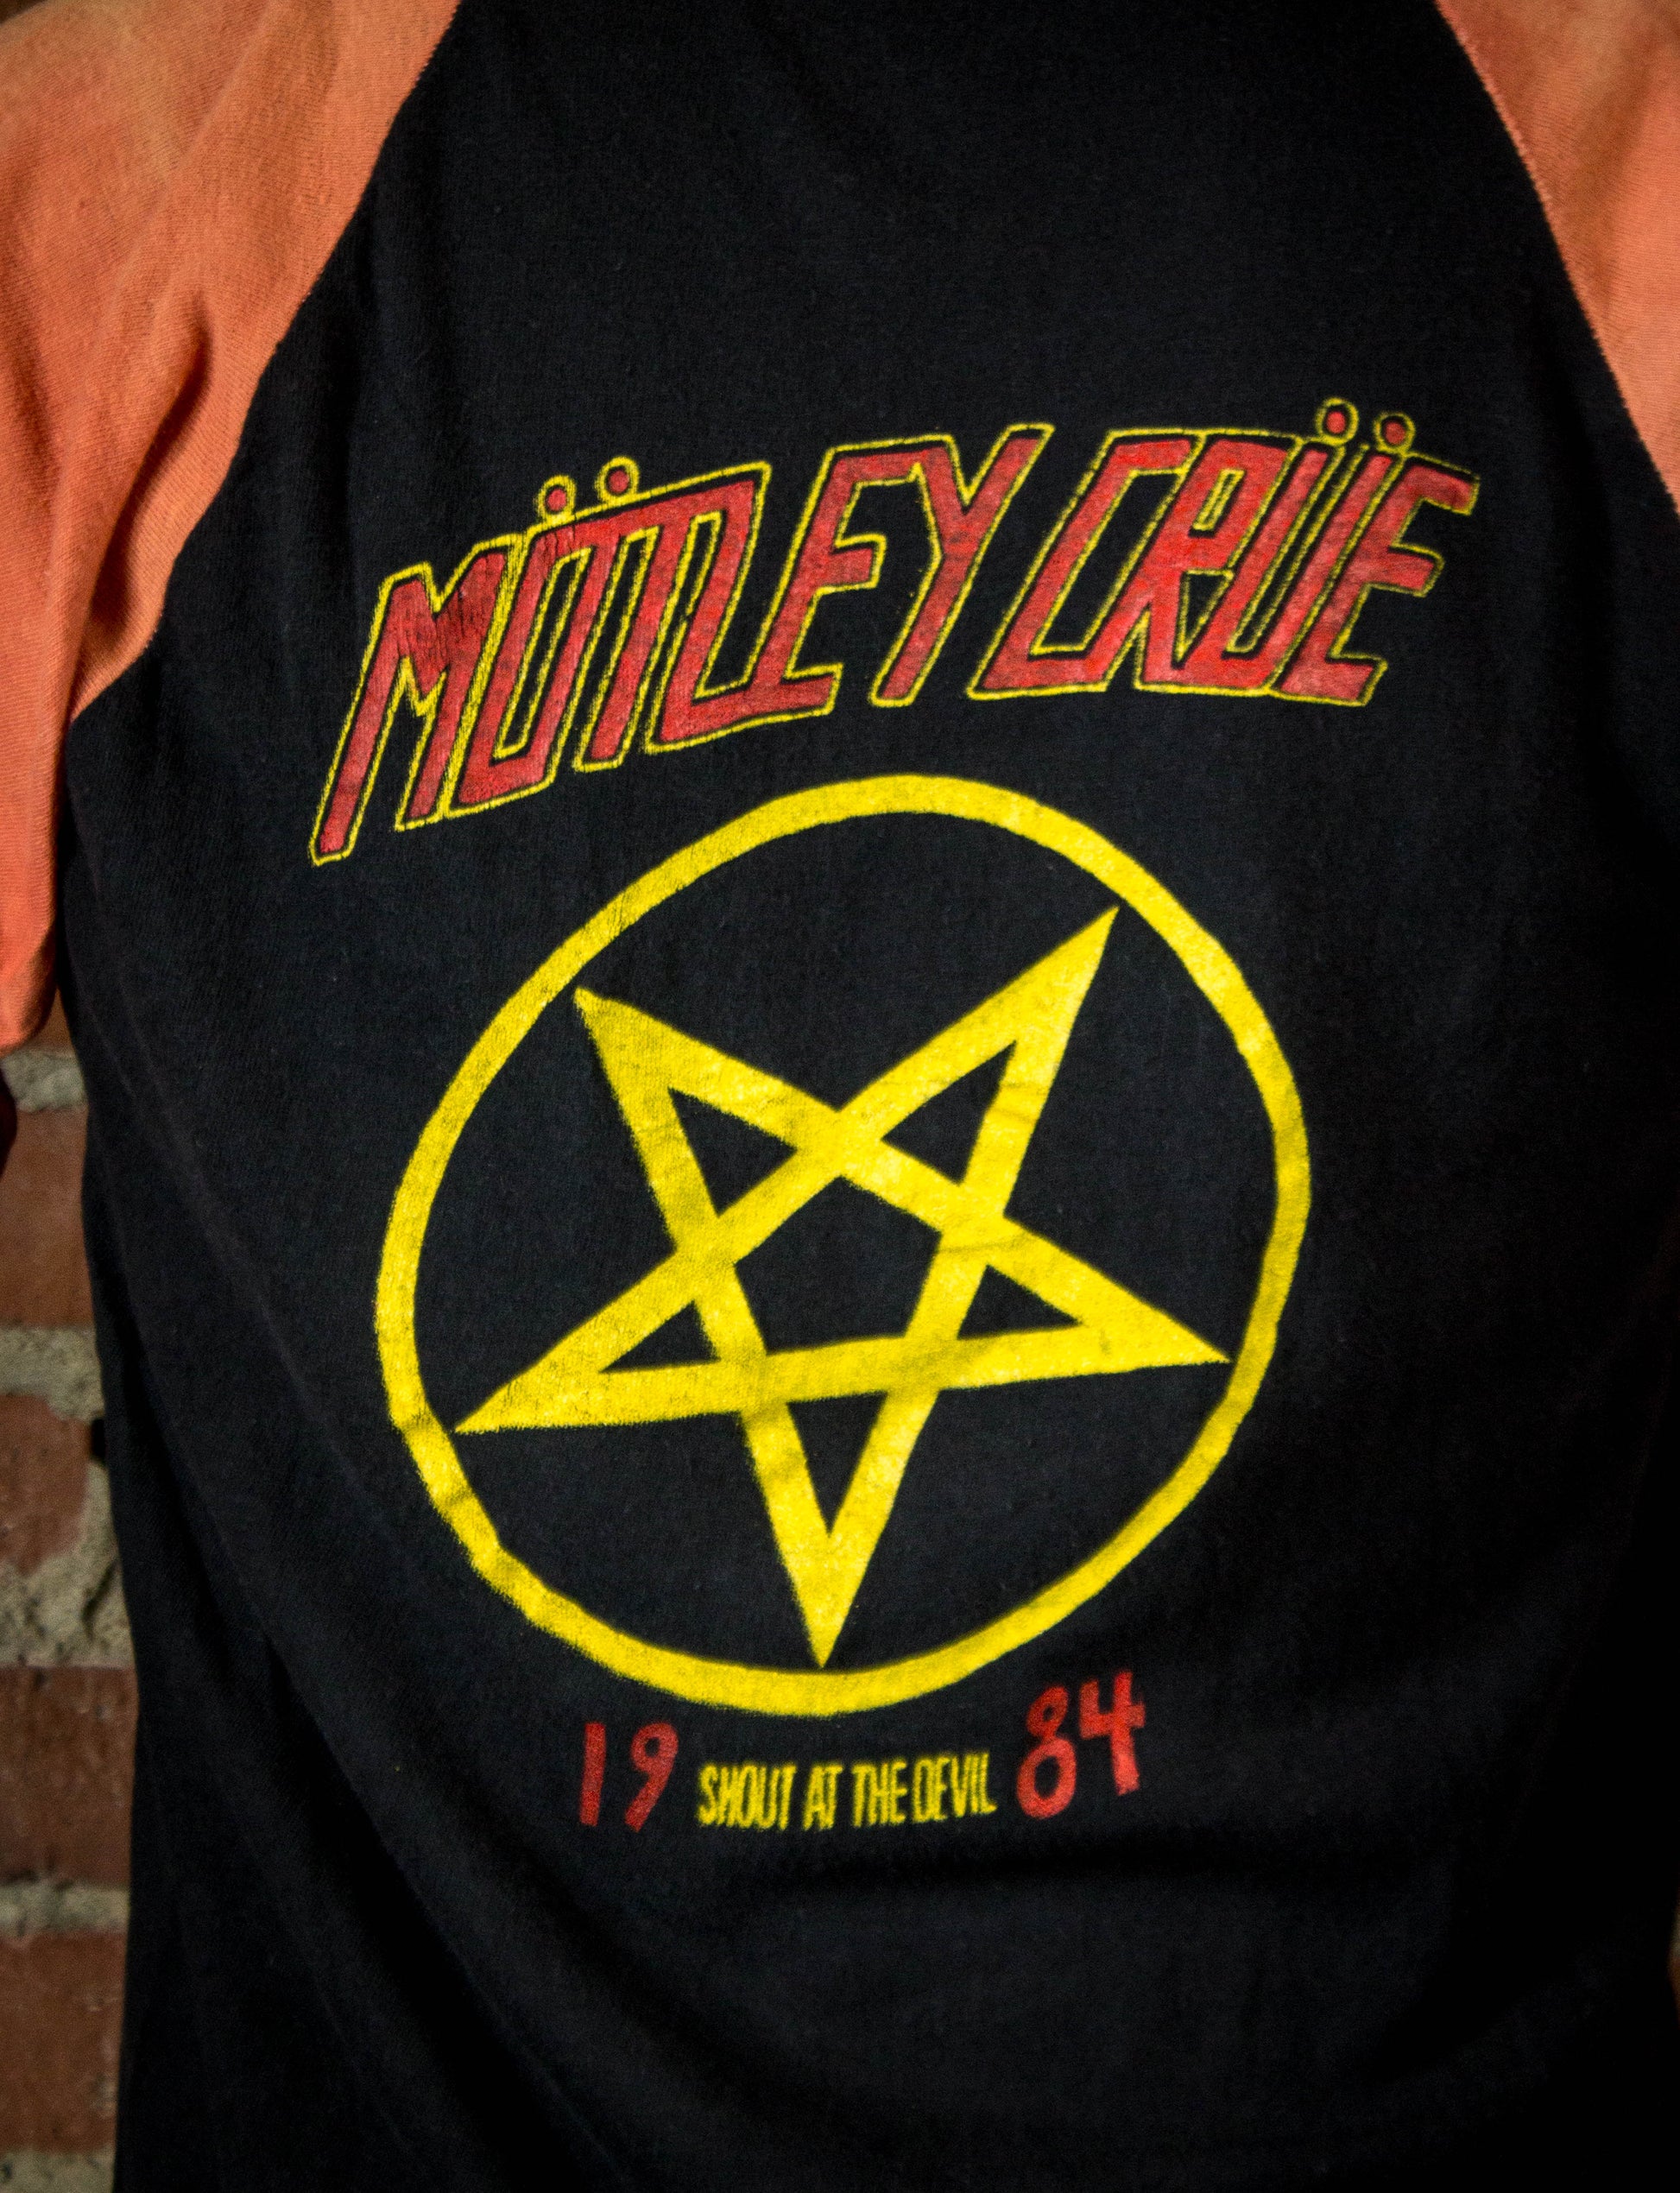 Vintage 1983 Motley Crue Shout At The Devil Jersey Bootleg Concert T Shirt Large